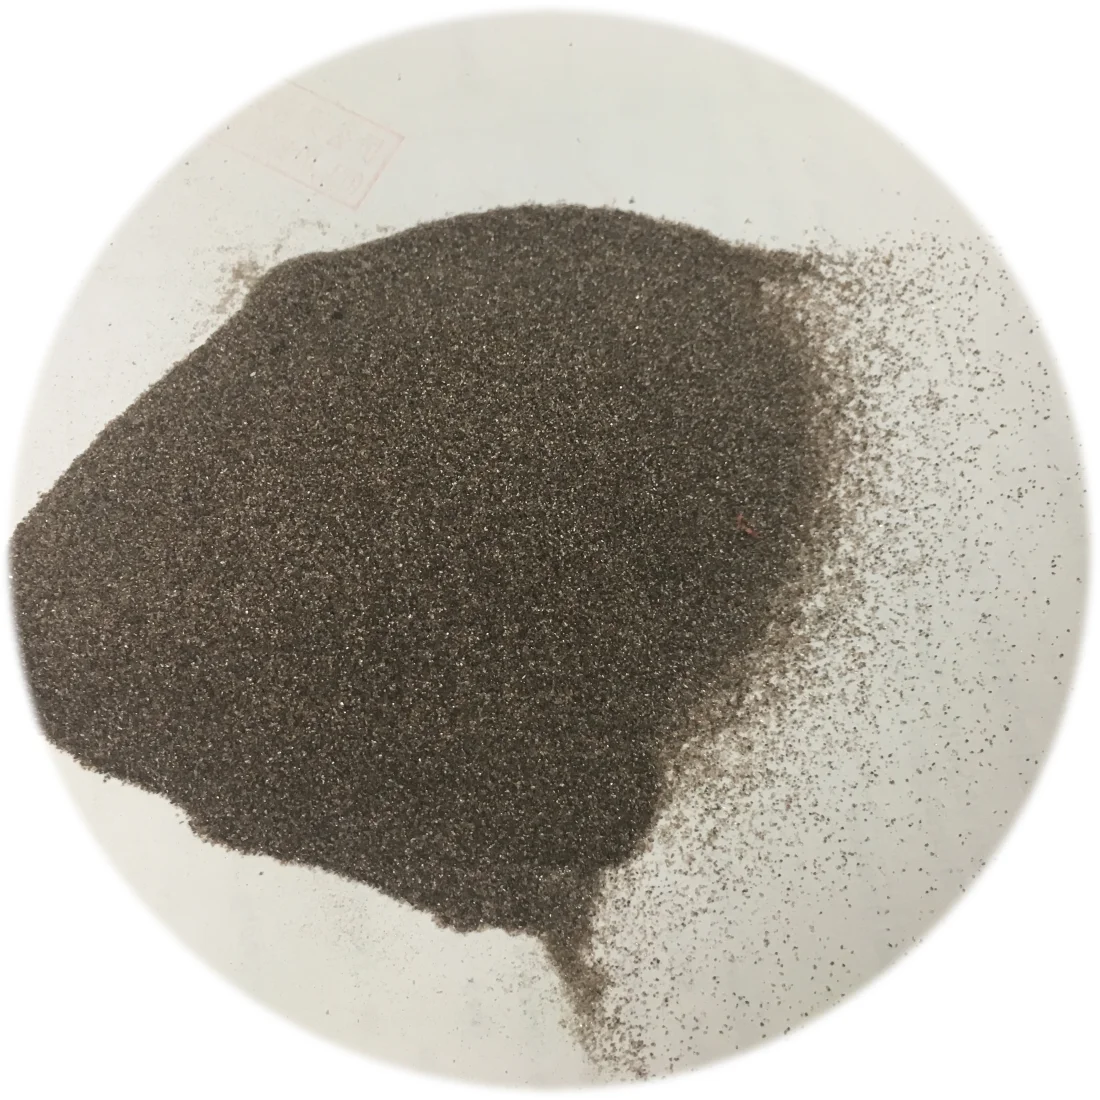 BFA 60# Sandblasting Abrasive Brown Fused Alumina Price News -1-